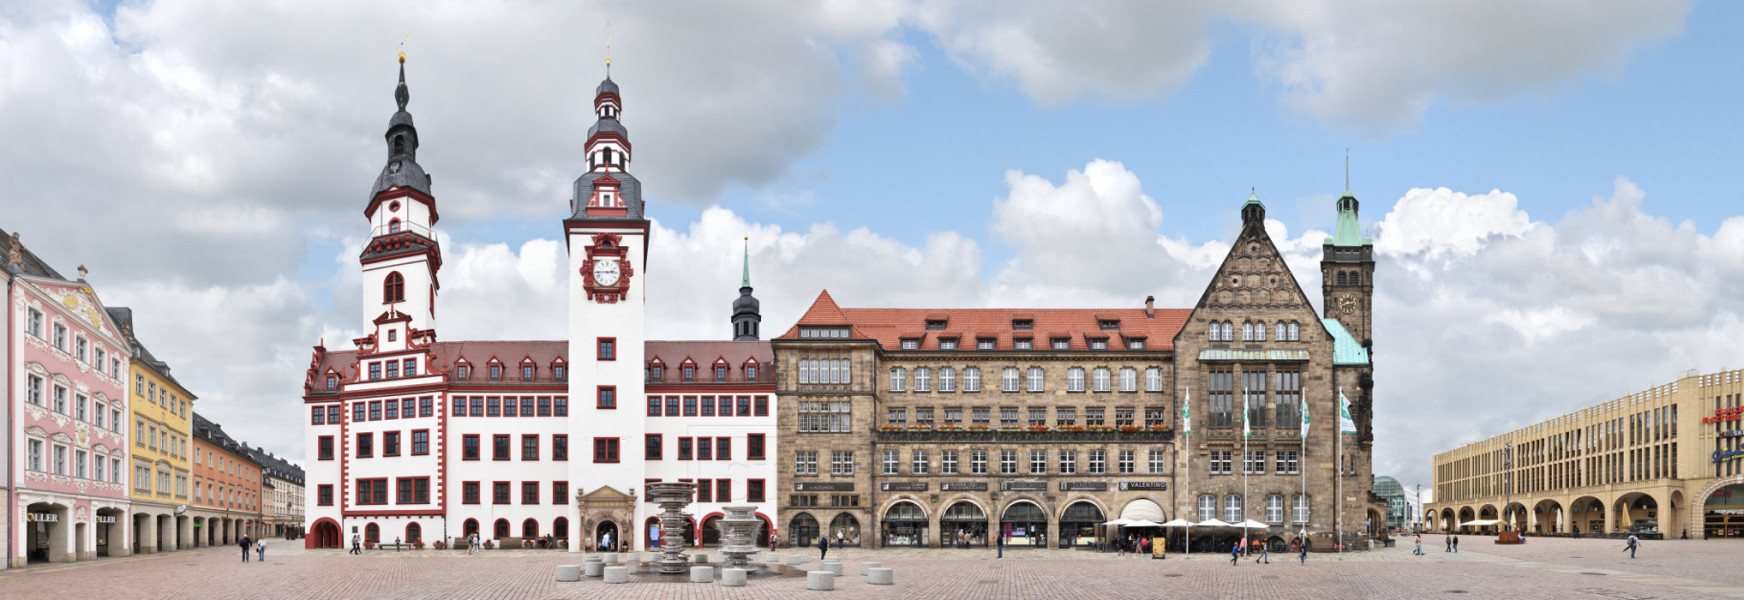 Altes Rathaus | Neues Rathaus